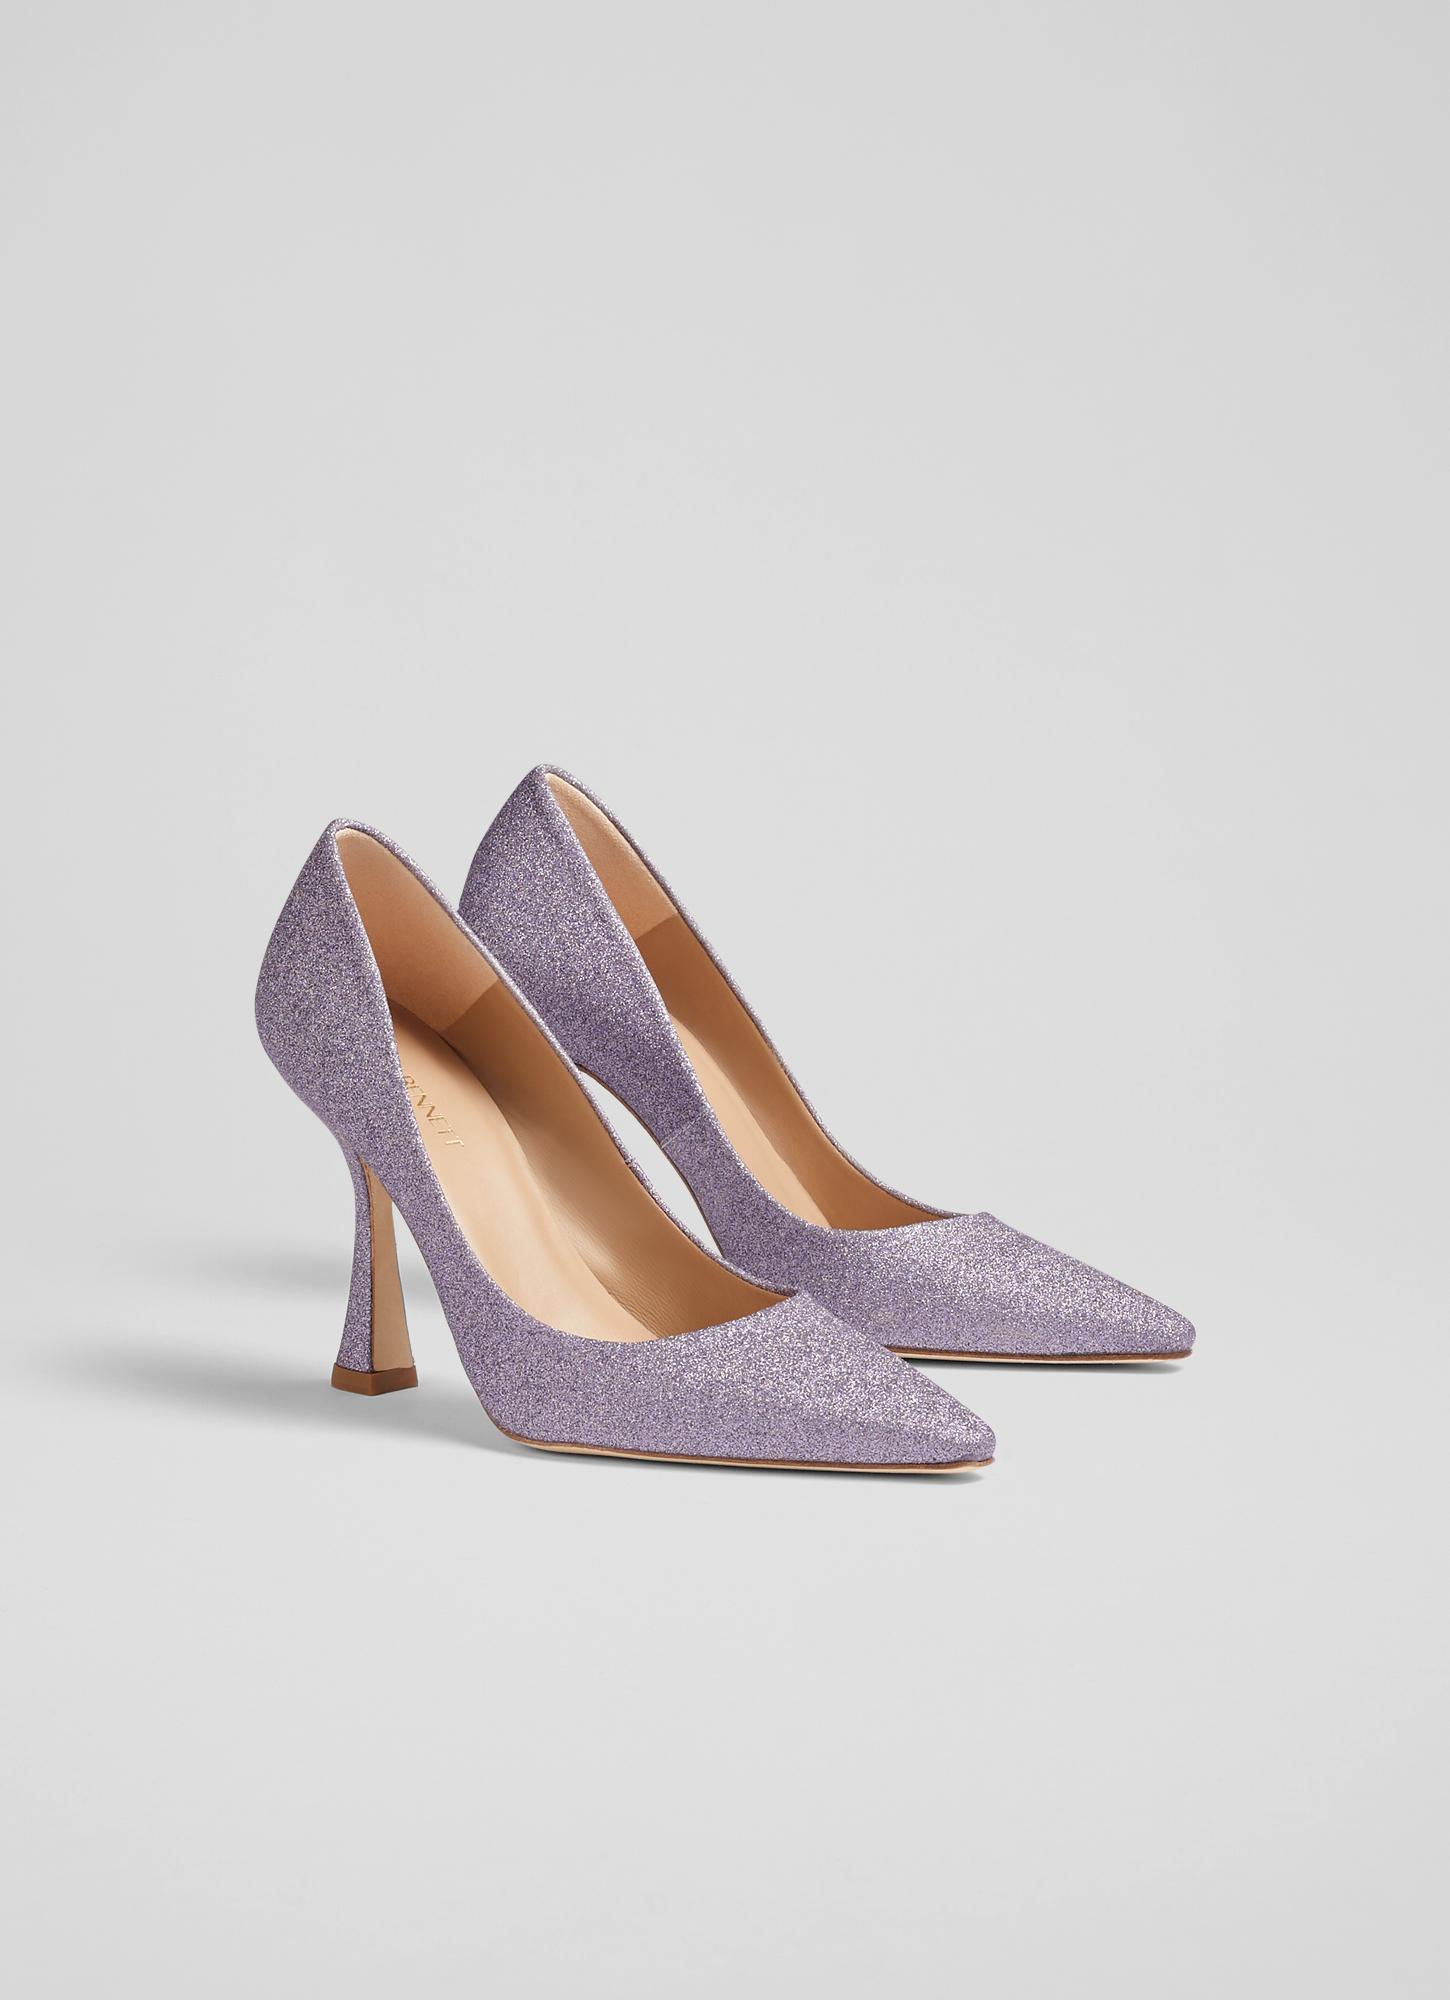 AMESTERDAM - LILAC | Lilac heels, Purple heeled sandals, Mint high heels